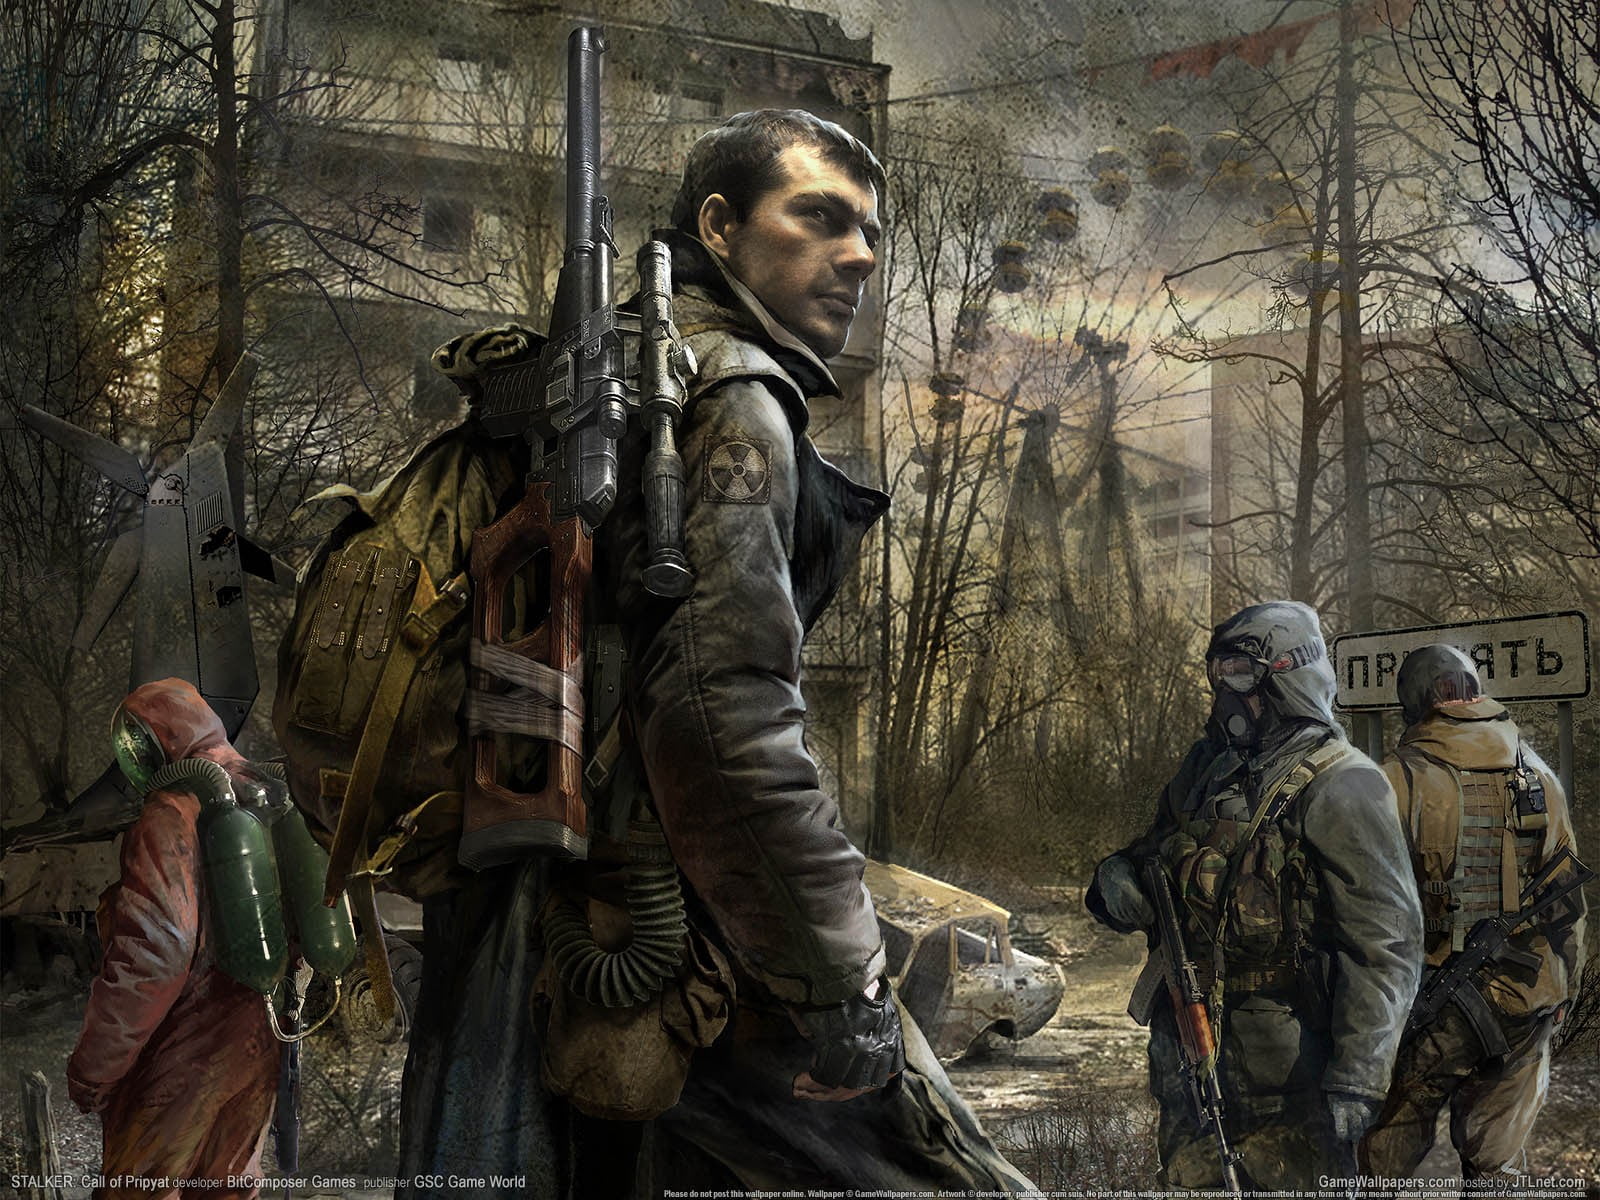 man in black rifle, S.T.A.L.K.E.R., video games, artwork, S.T.A.L.K.E.R.: Call of Pripyat